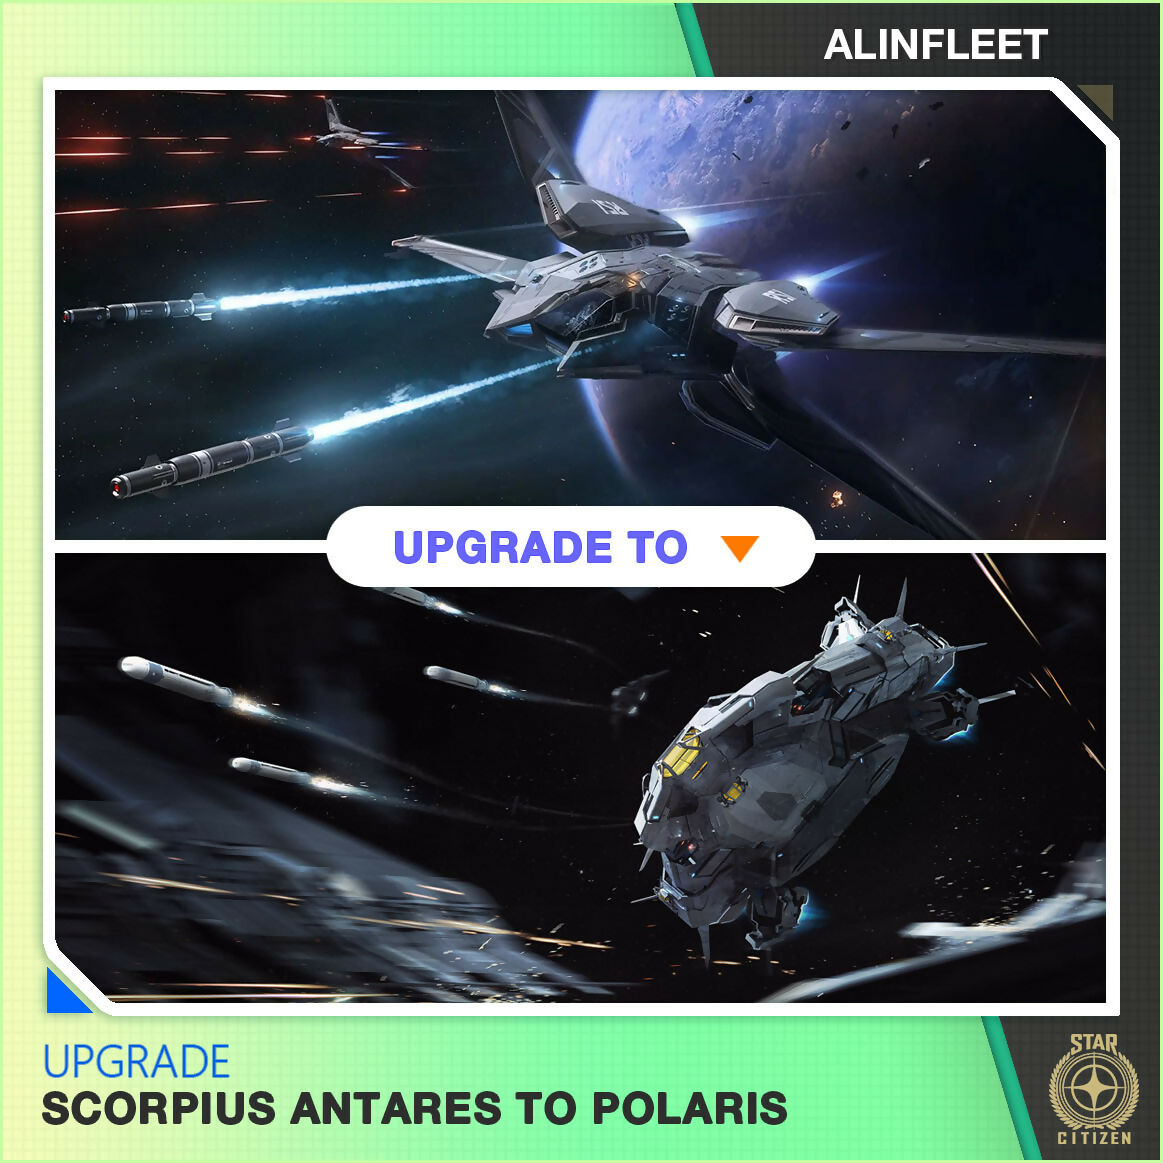 Upgrade - Scorpius Antares to Polaris